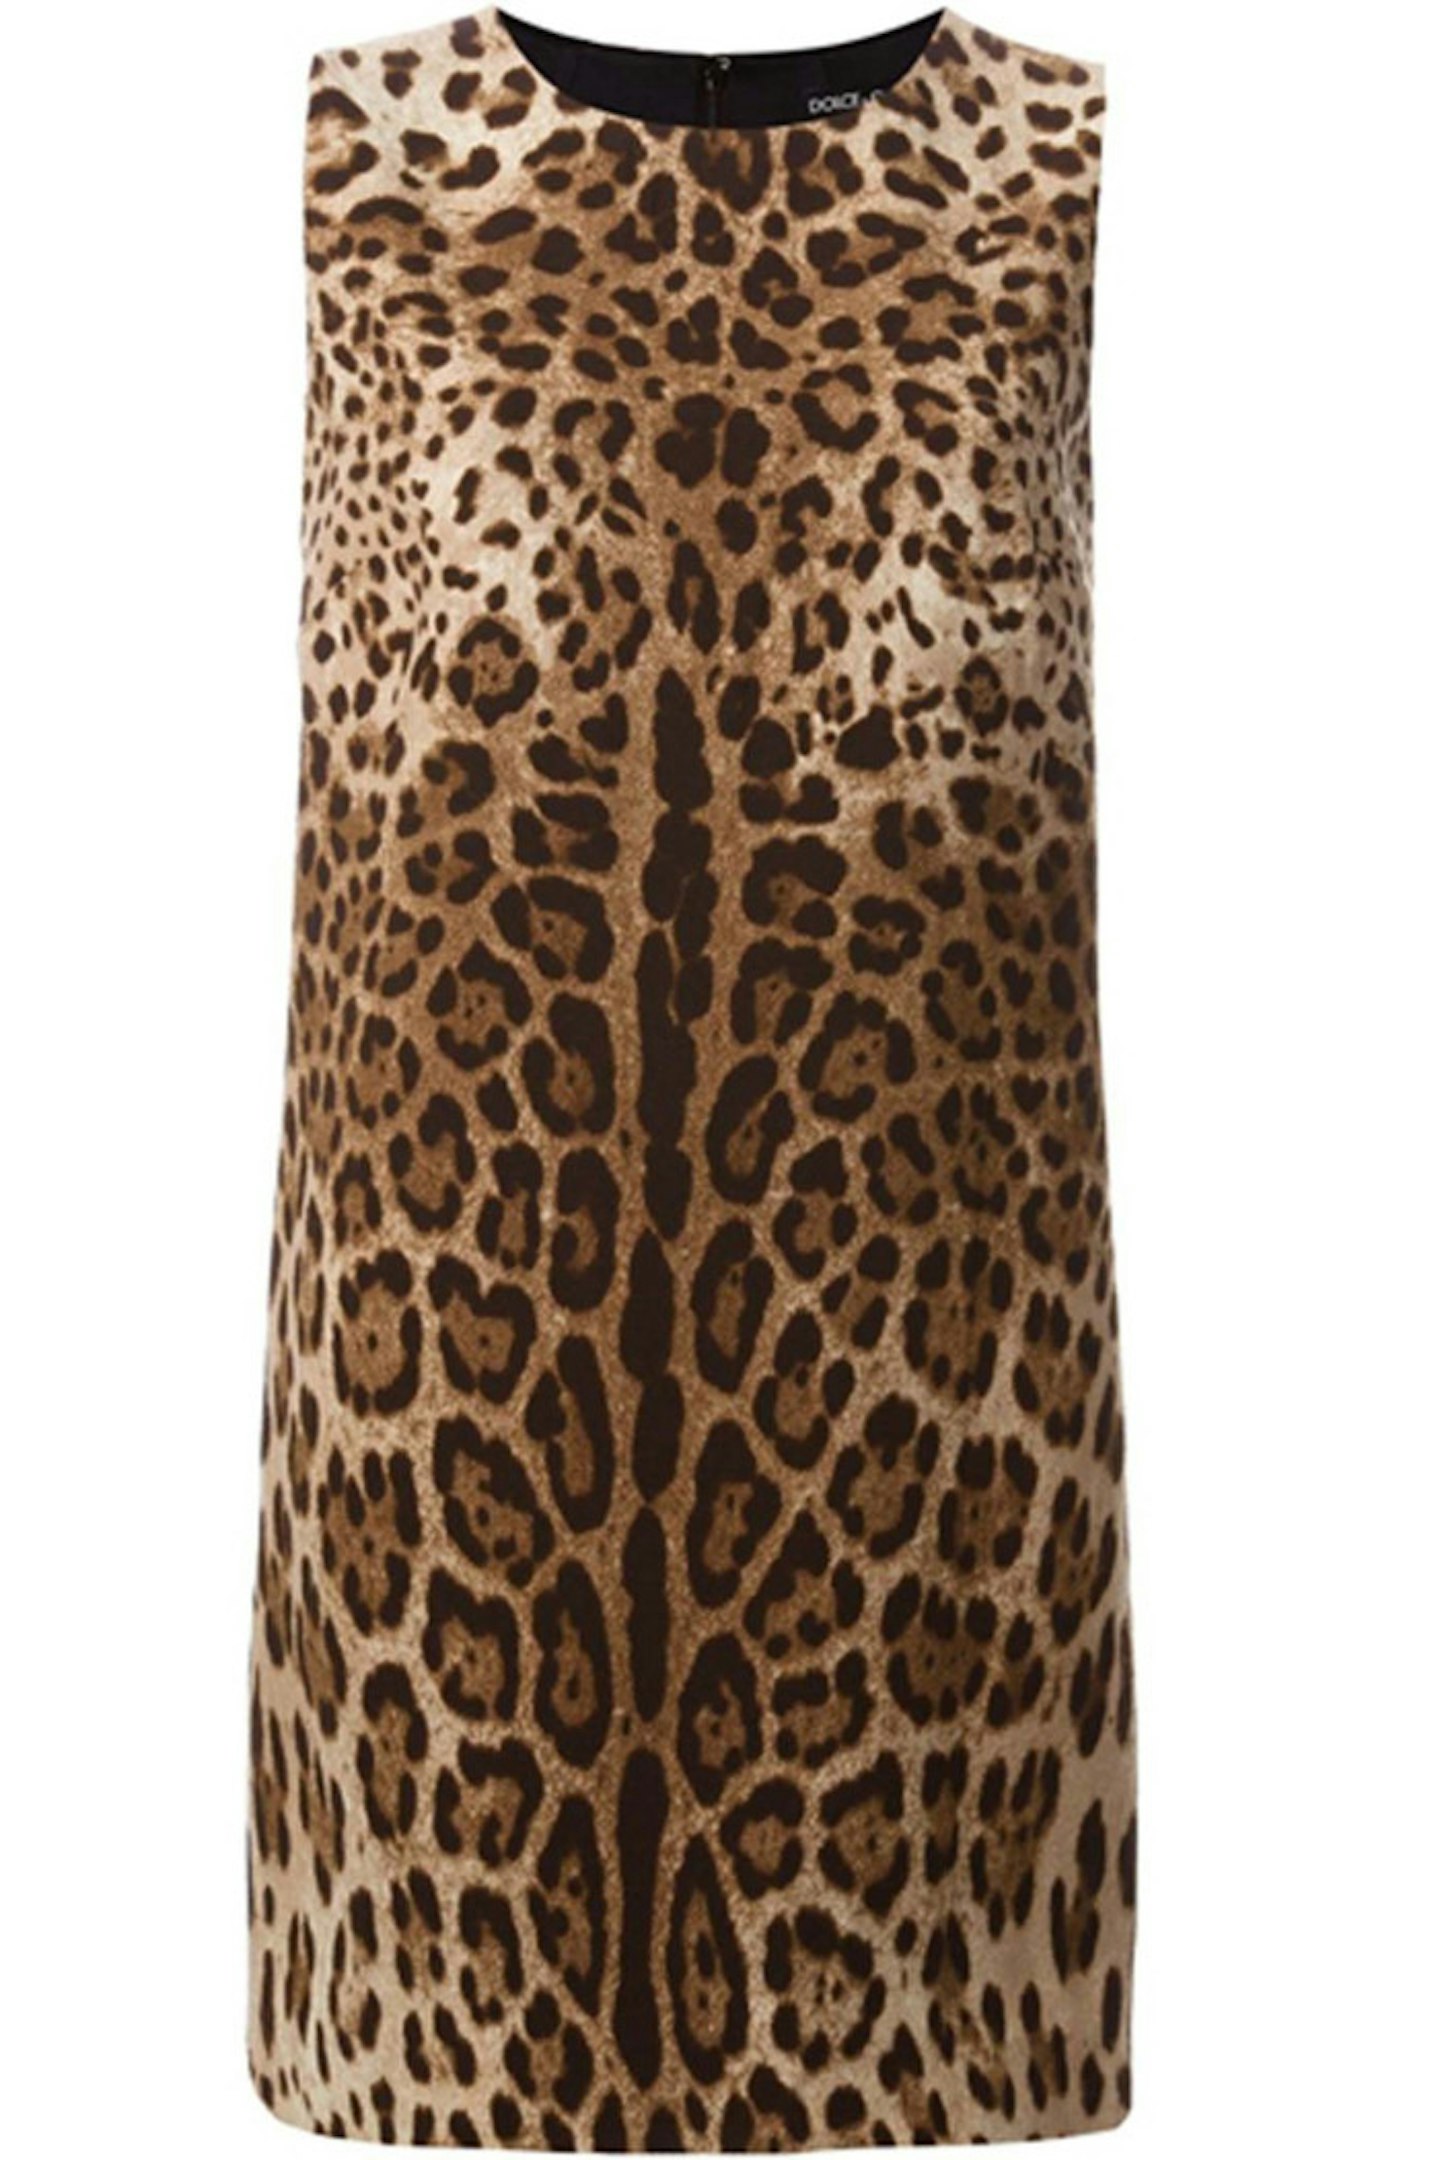 23. Animal Print Shift Dress, £966.02, Dolce & Gabbana at Farfetch